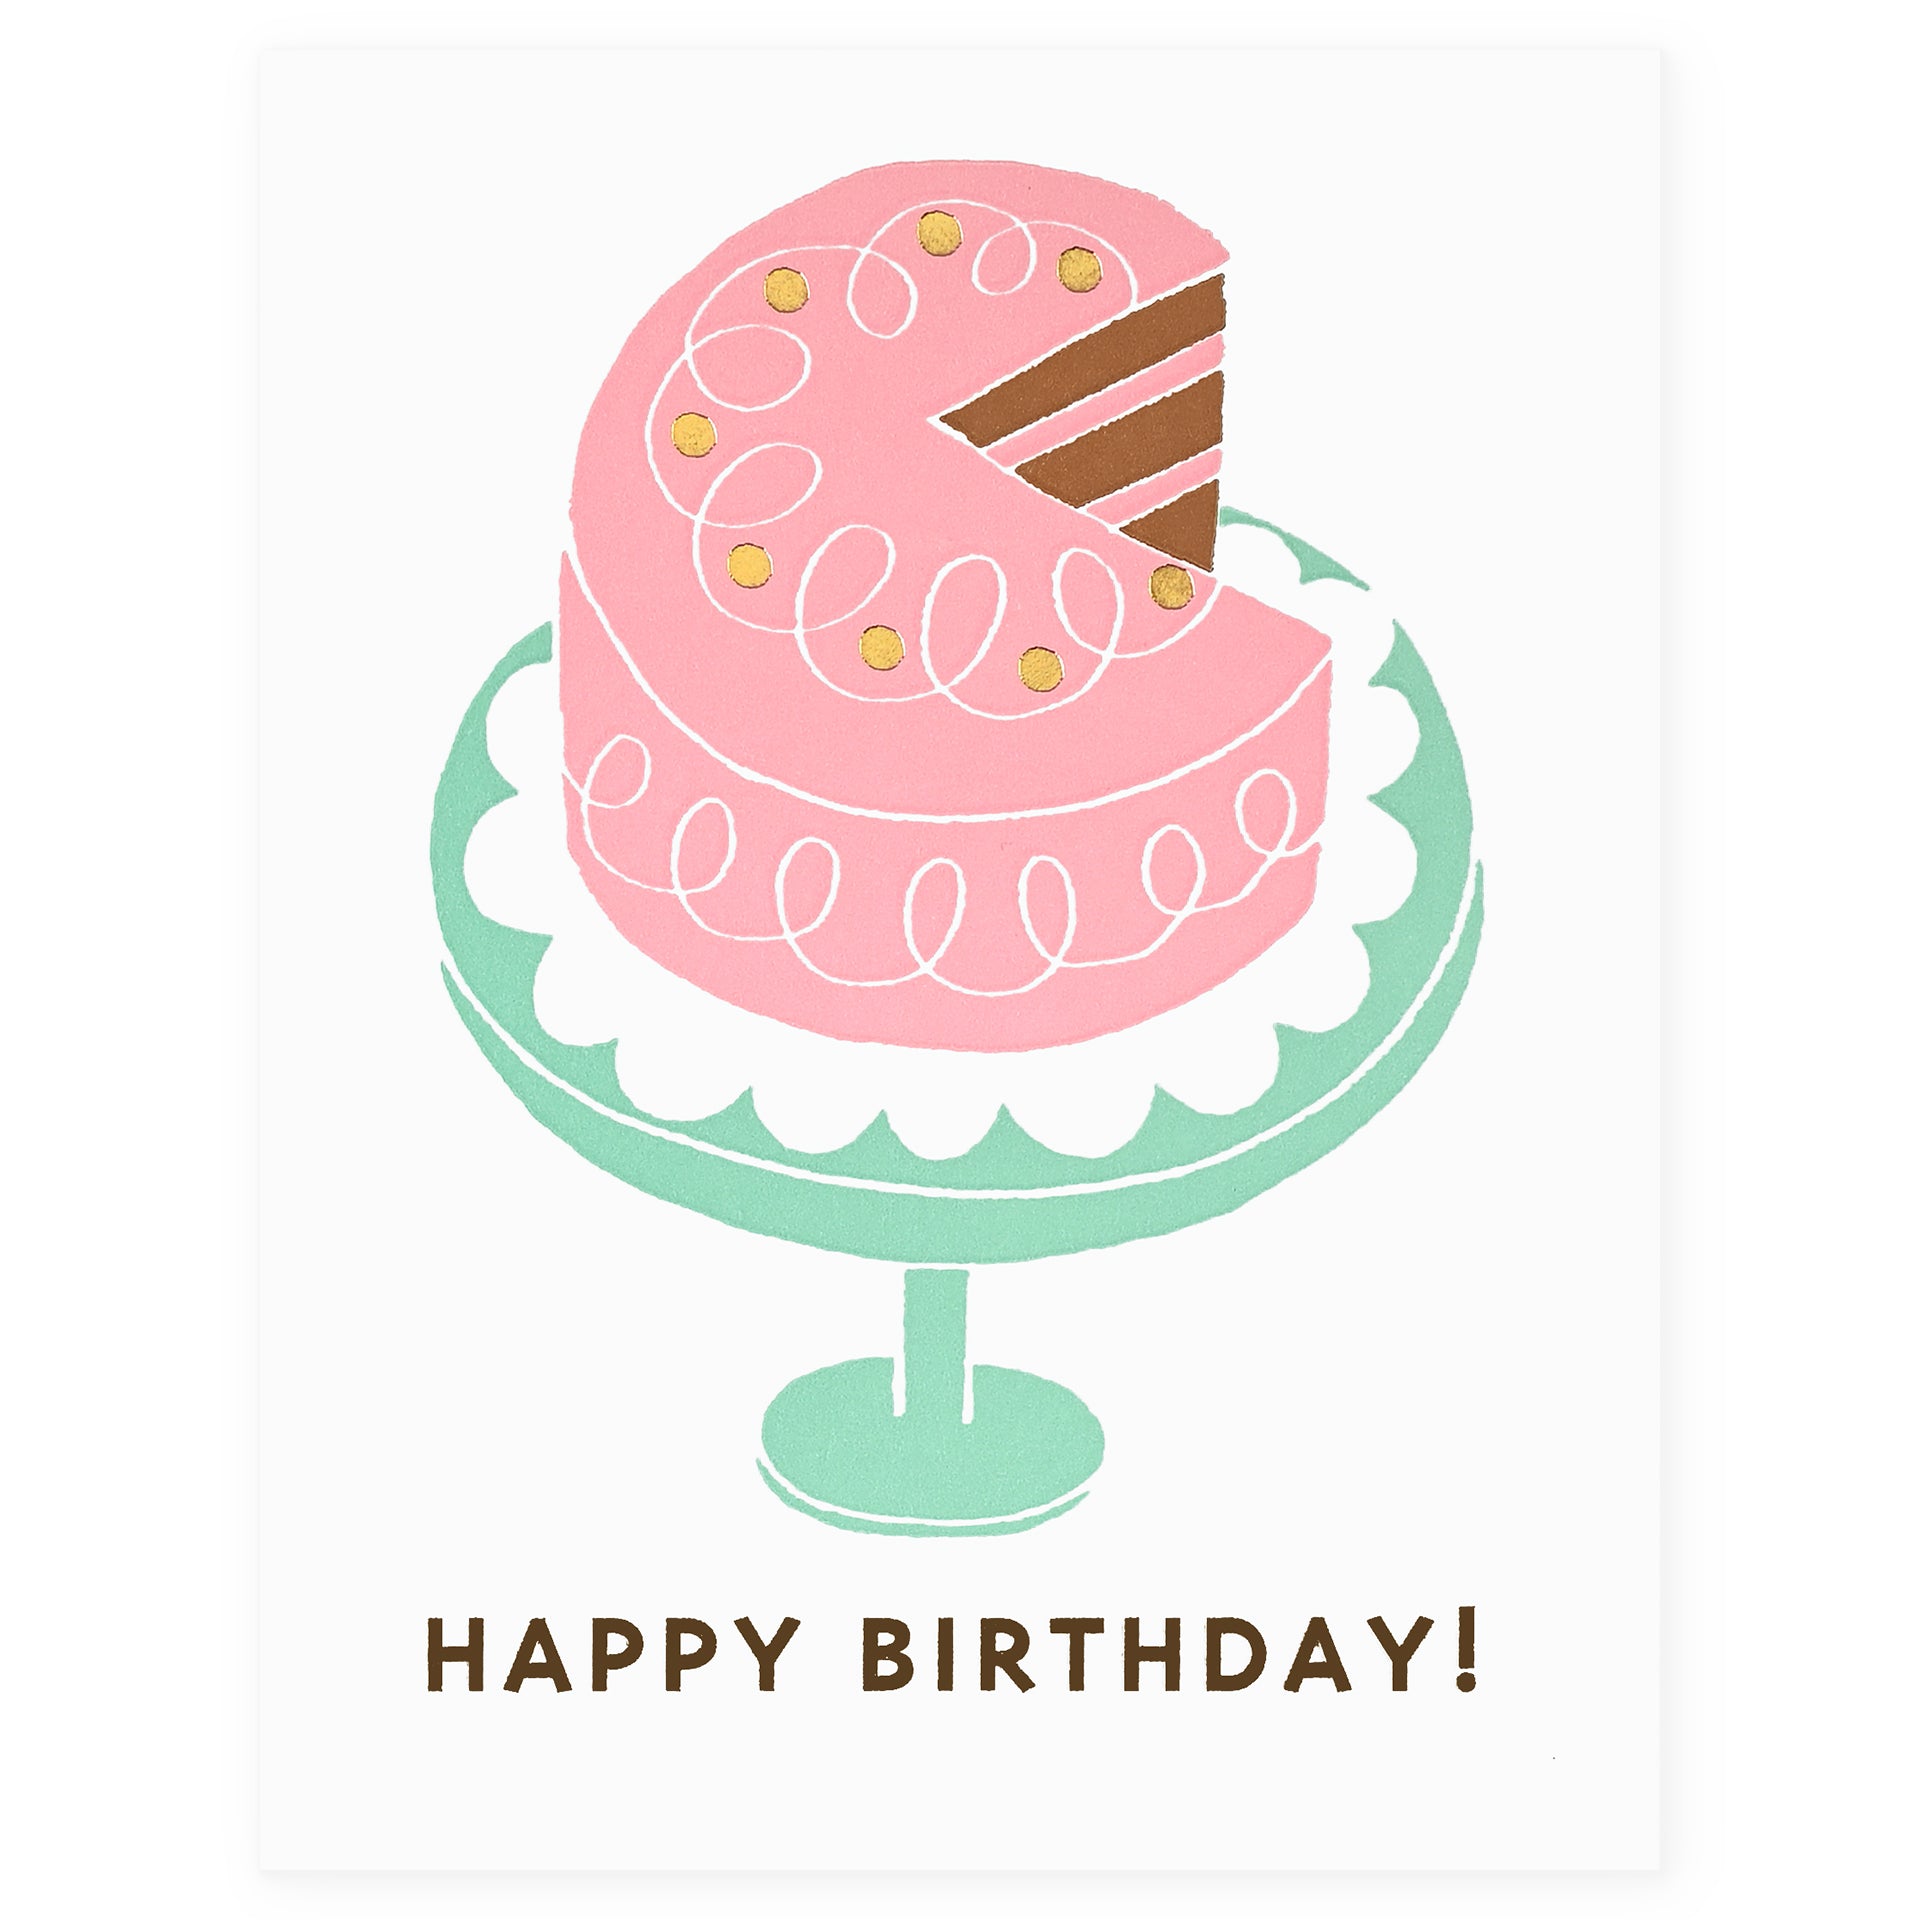 Shining Birthday Cake Card for Friends | Birthday & Greeting Cards by Davia  | Happy birthday friend cake, Birthday cake card, Happy birthday friend